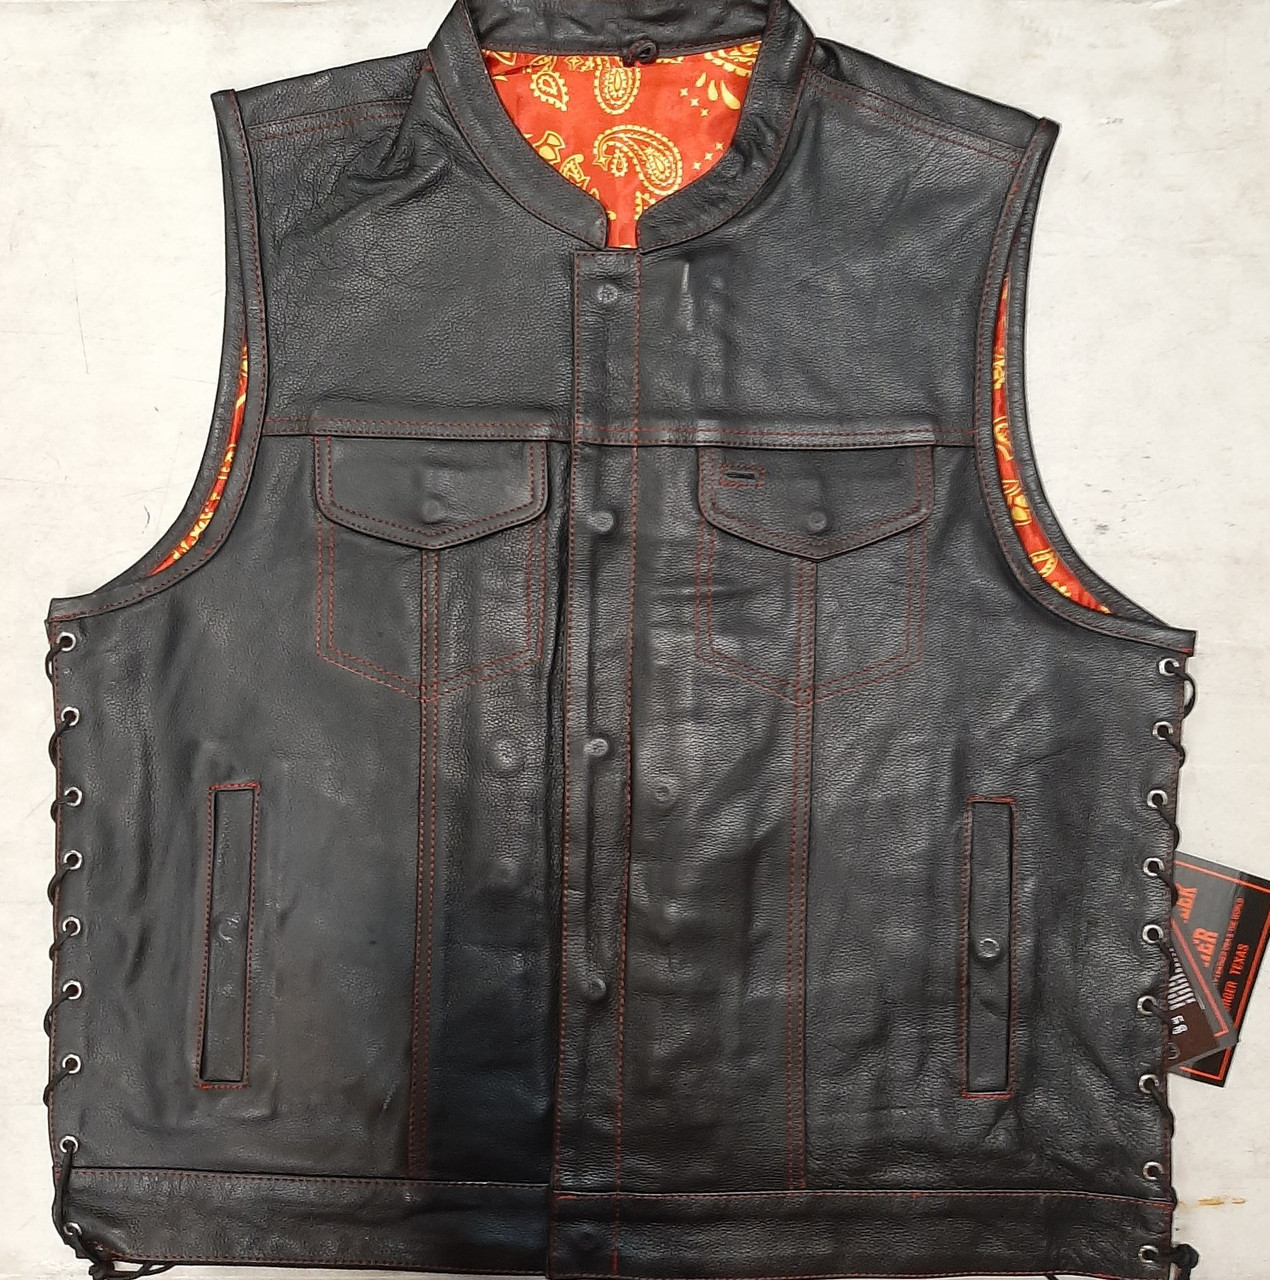 Men's Leather Vests